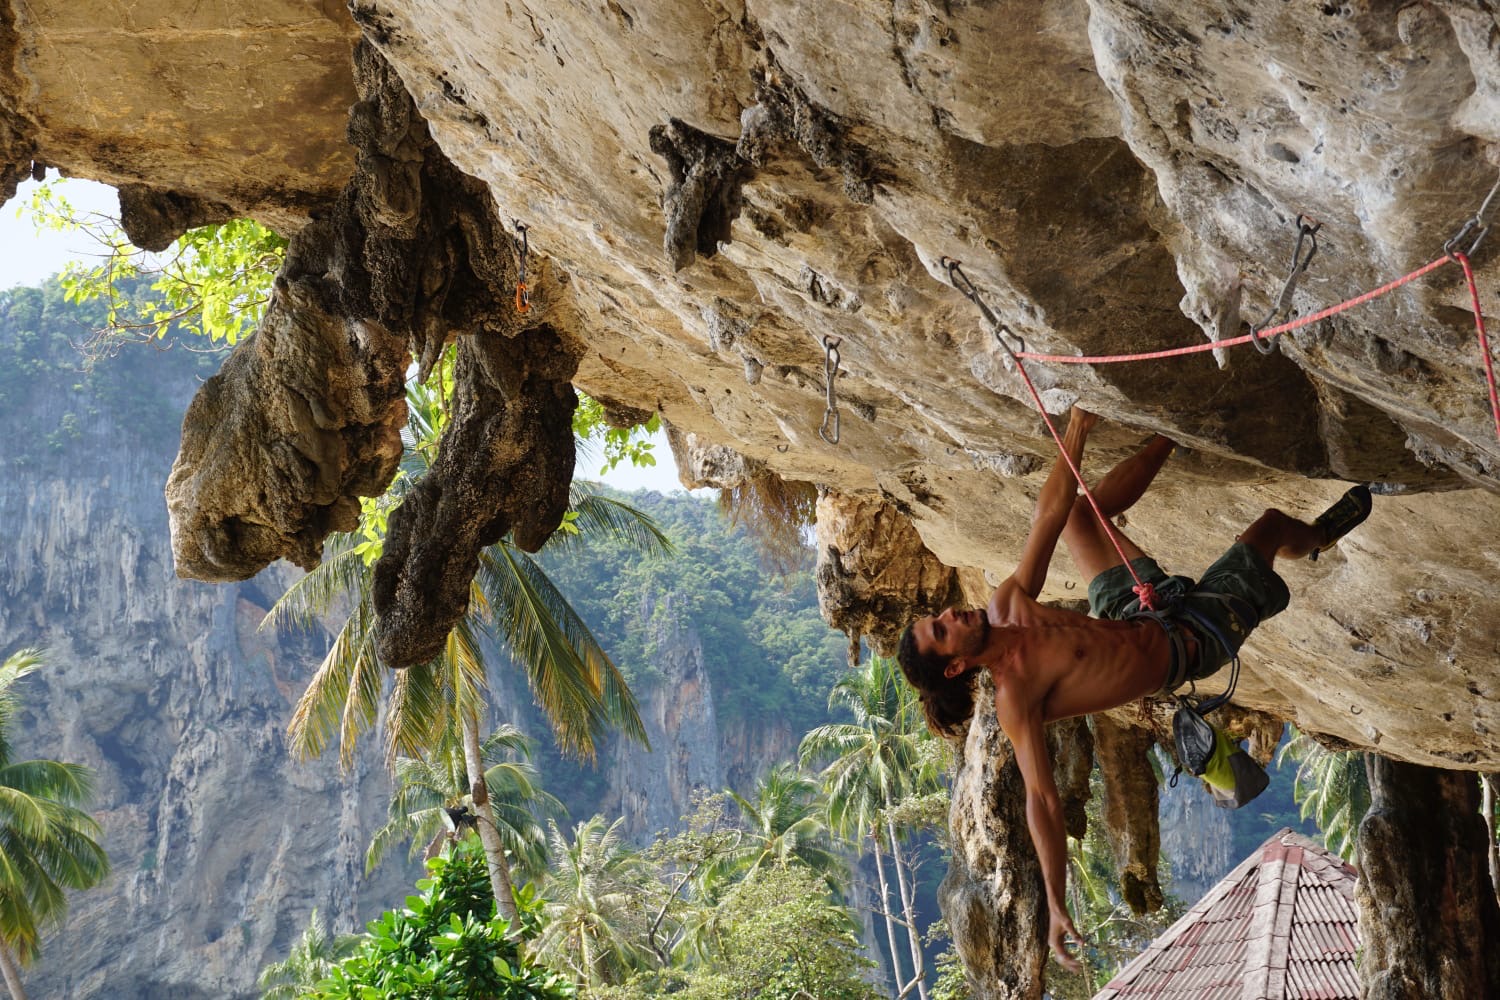 Juan rock climbing on a roof in Jamaica